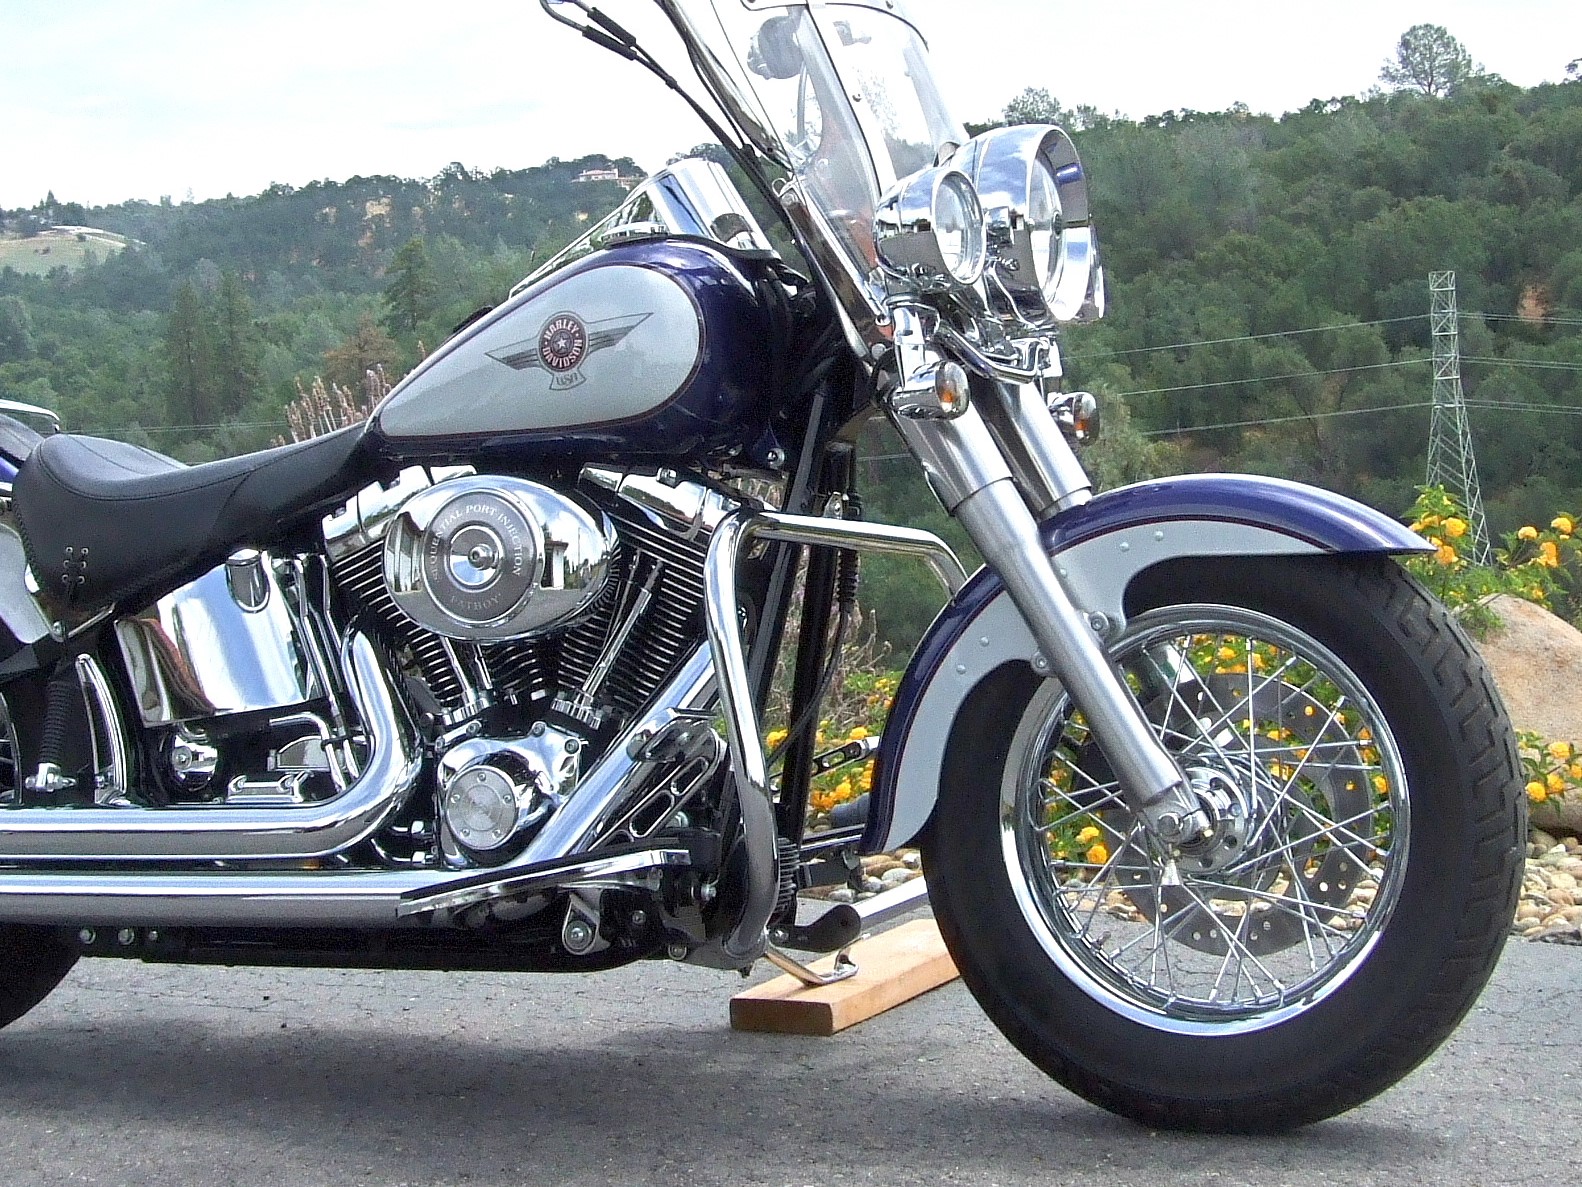 W&W Cycles - Simichrome Polish for Harley-Davidson